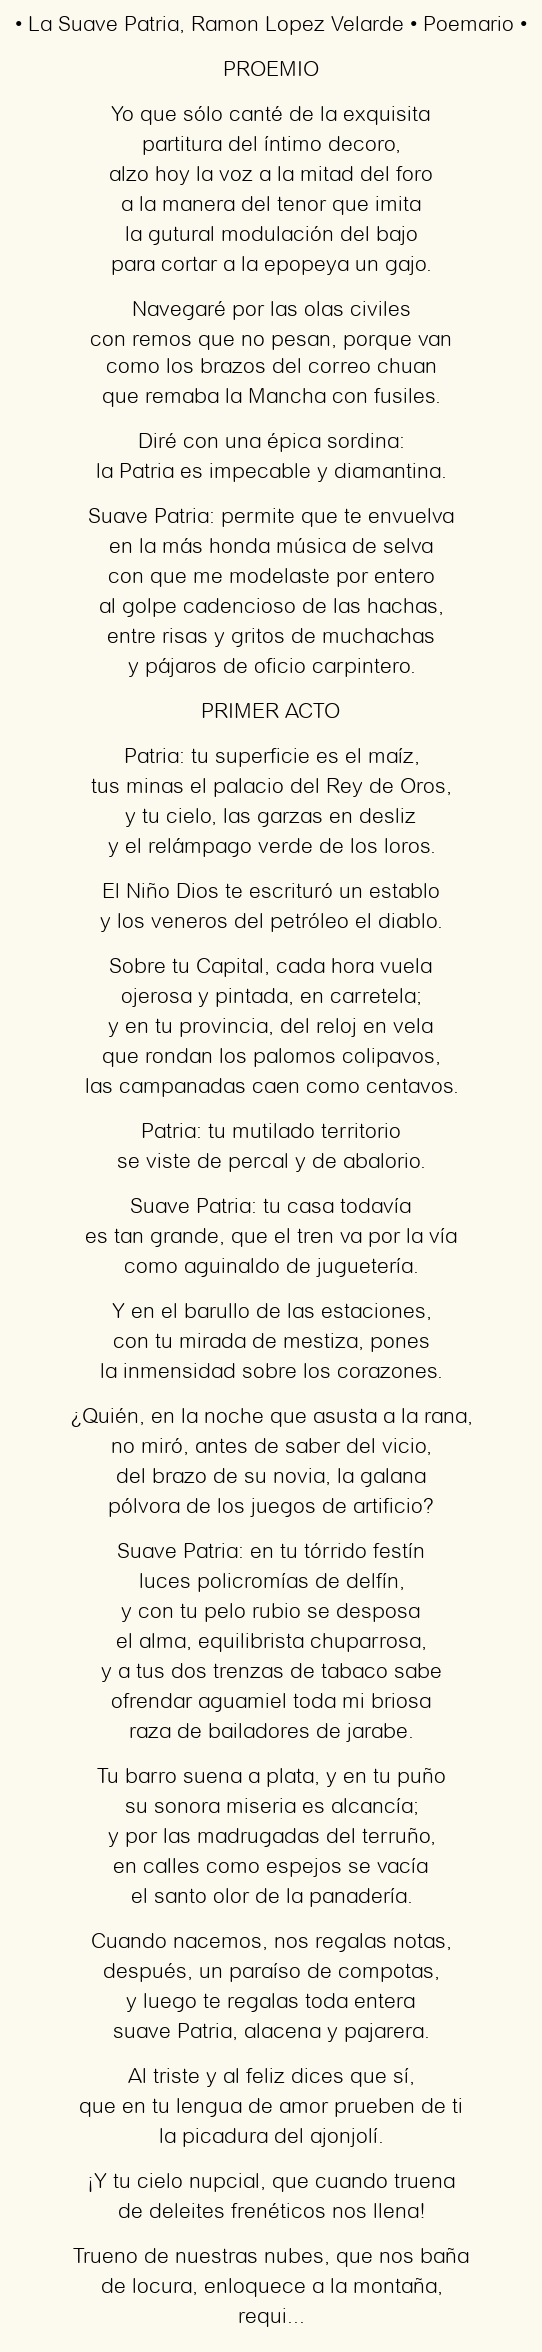 Imagen con el poema La Suave Patria, por Ramon Lopez Velarde